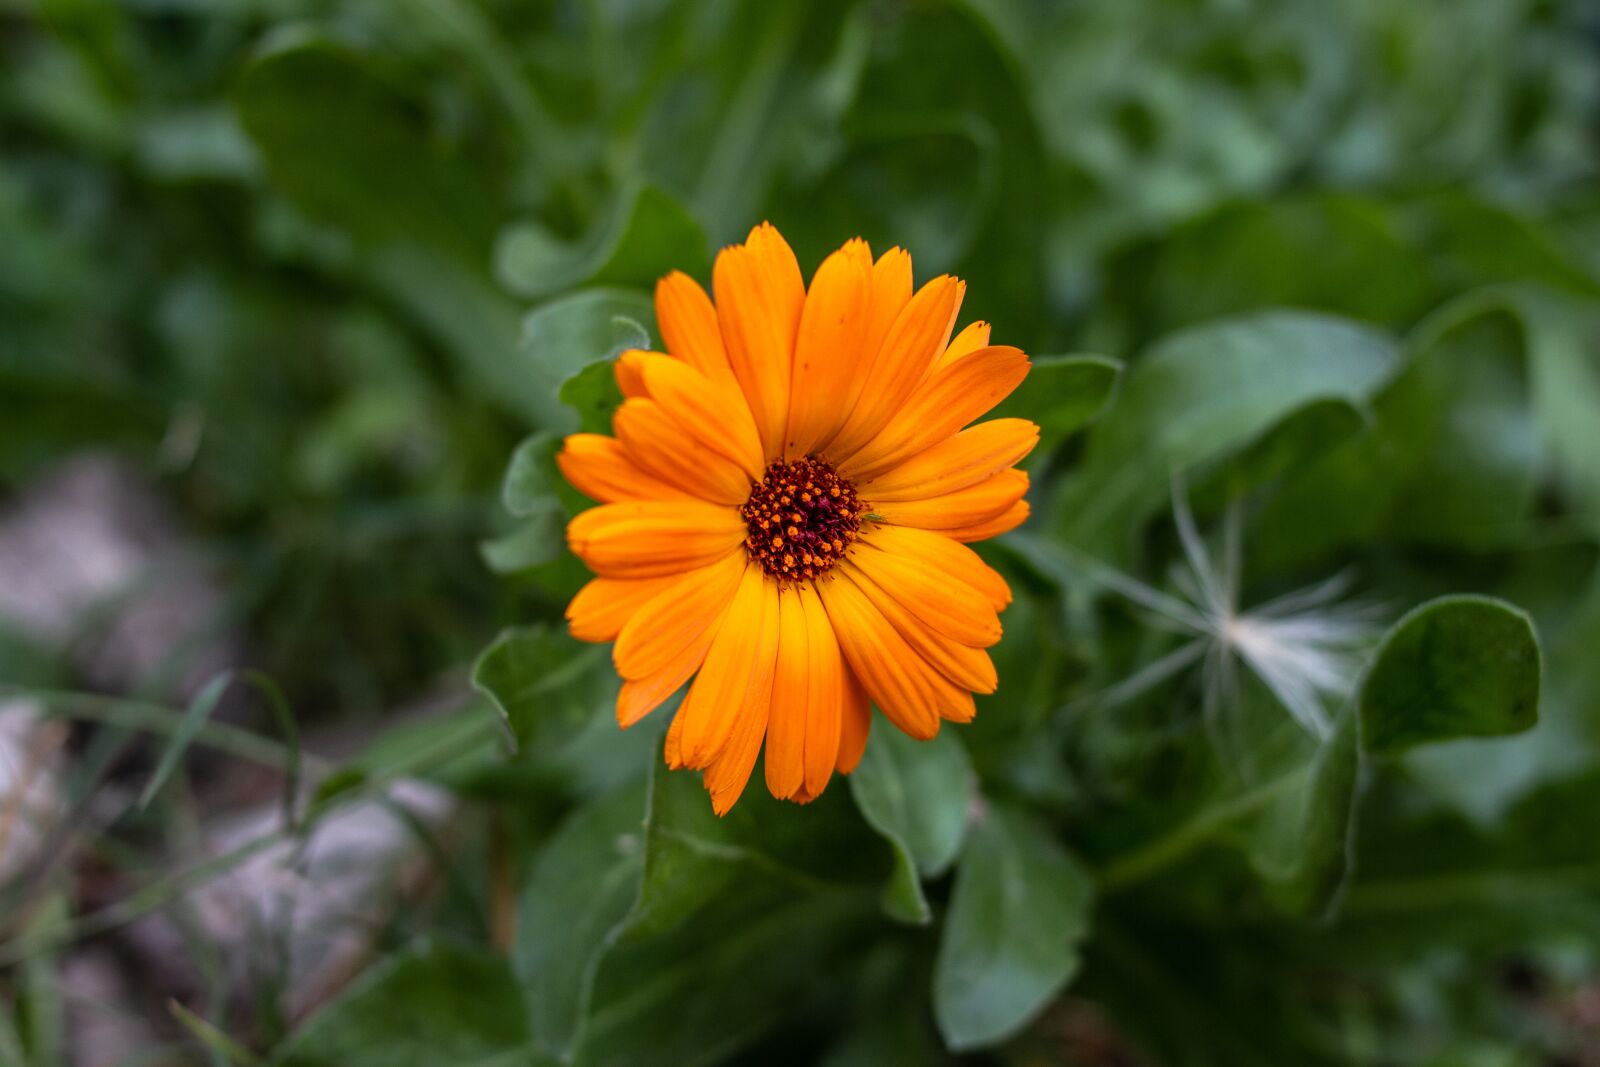 ZEISS Milvus 35mm F1.4 sample photo. Flower, garden, orange photography